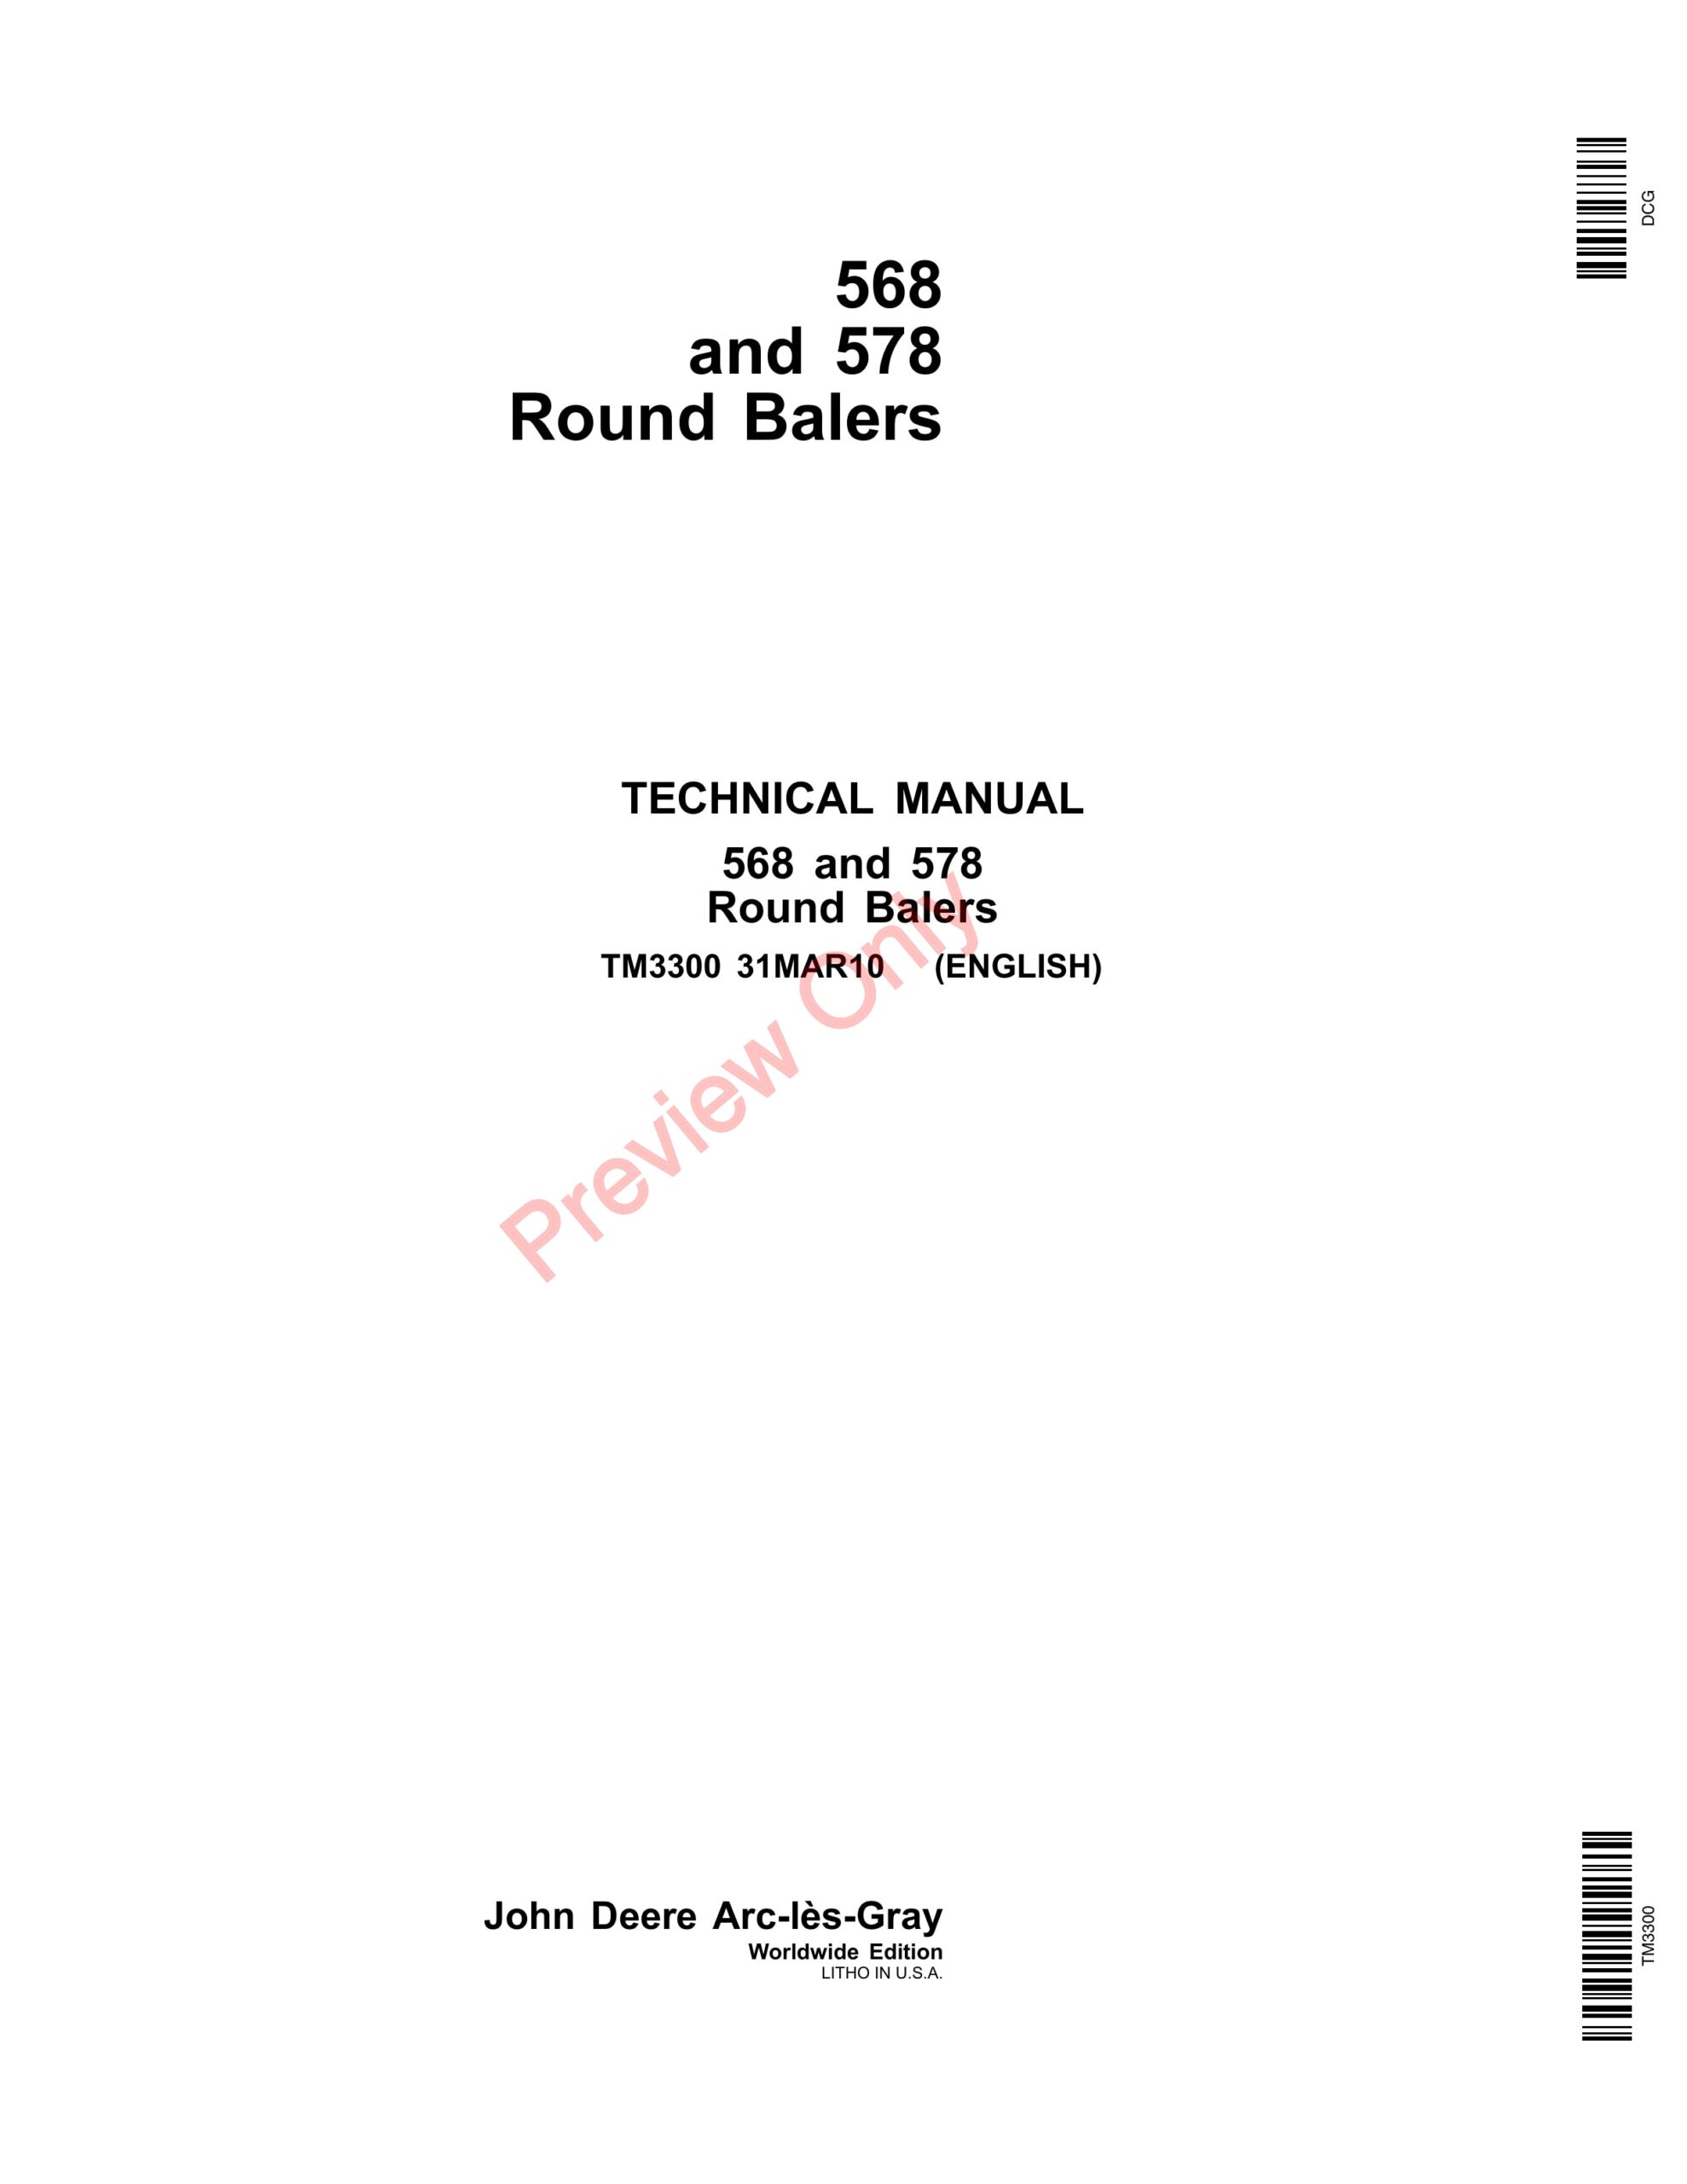 John Deere 568 and 578 Round Balers Technical Manual TM3300 31MAR10-1